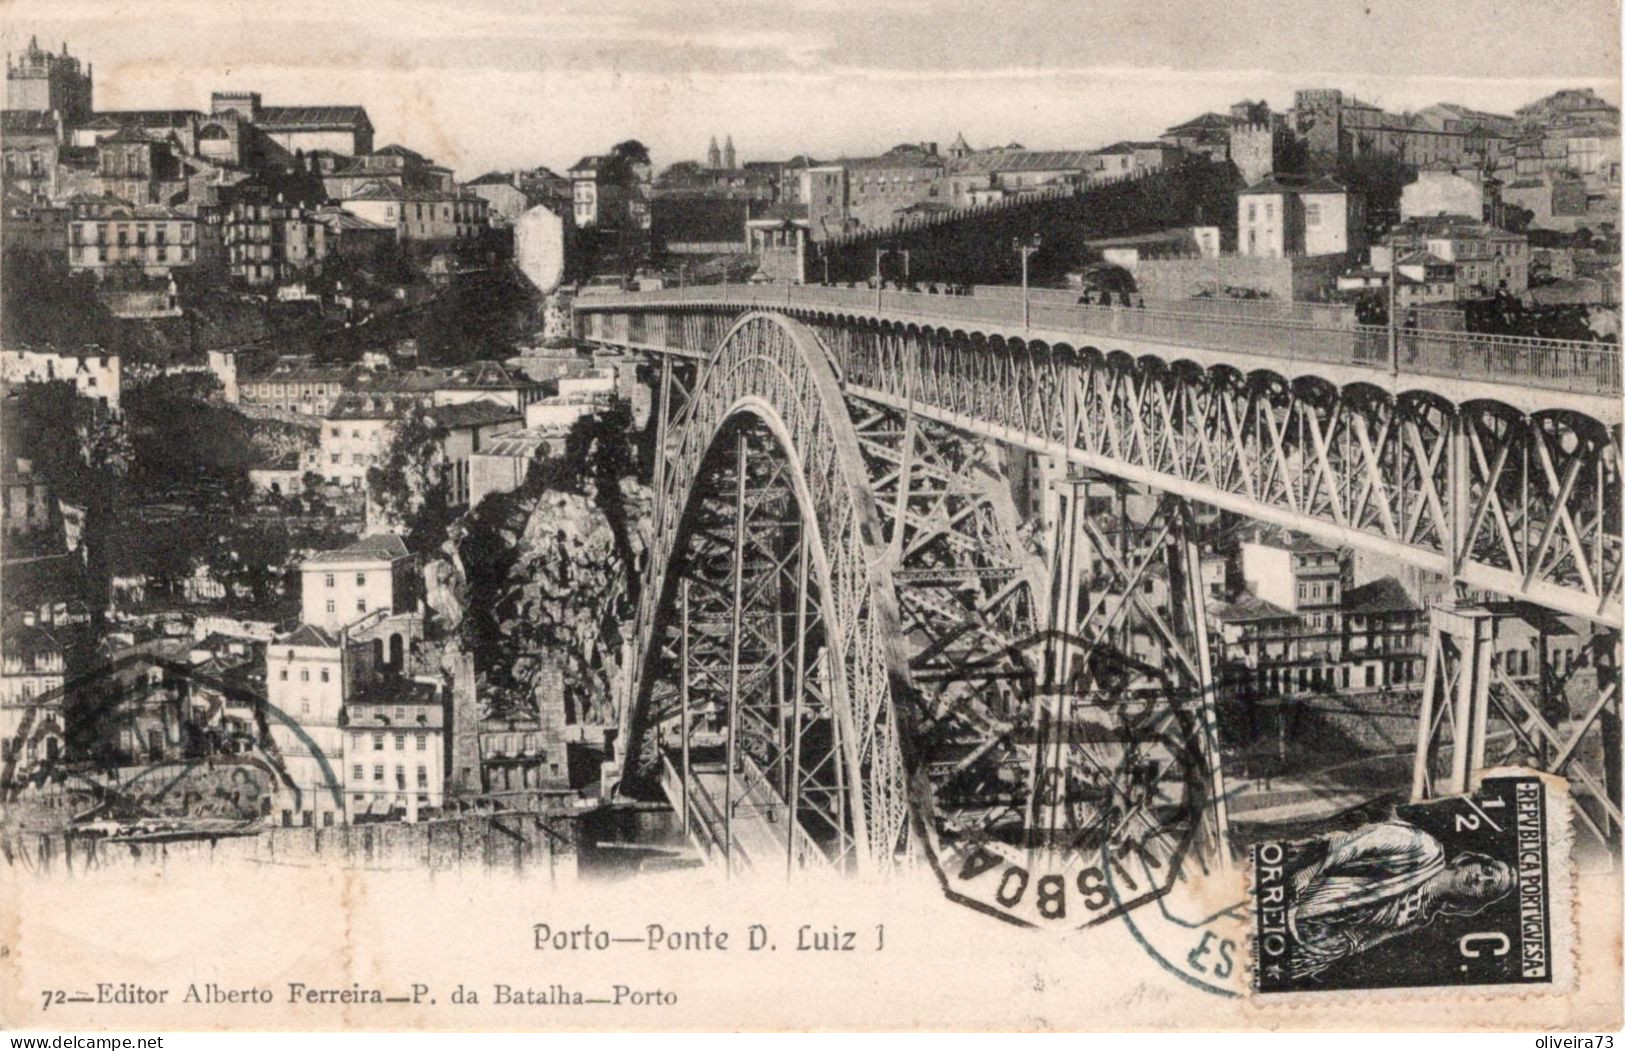 PORTO - Ponte D. Luiz I (Ed. Alberto Ferreira - Nº 72) PORTUGAL - Porto